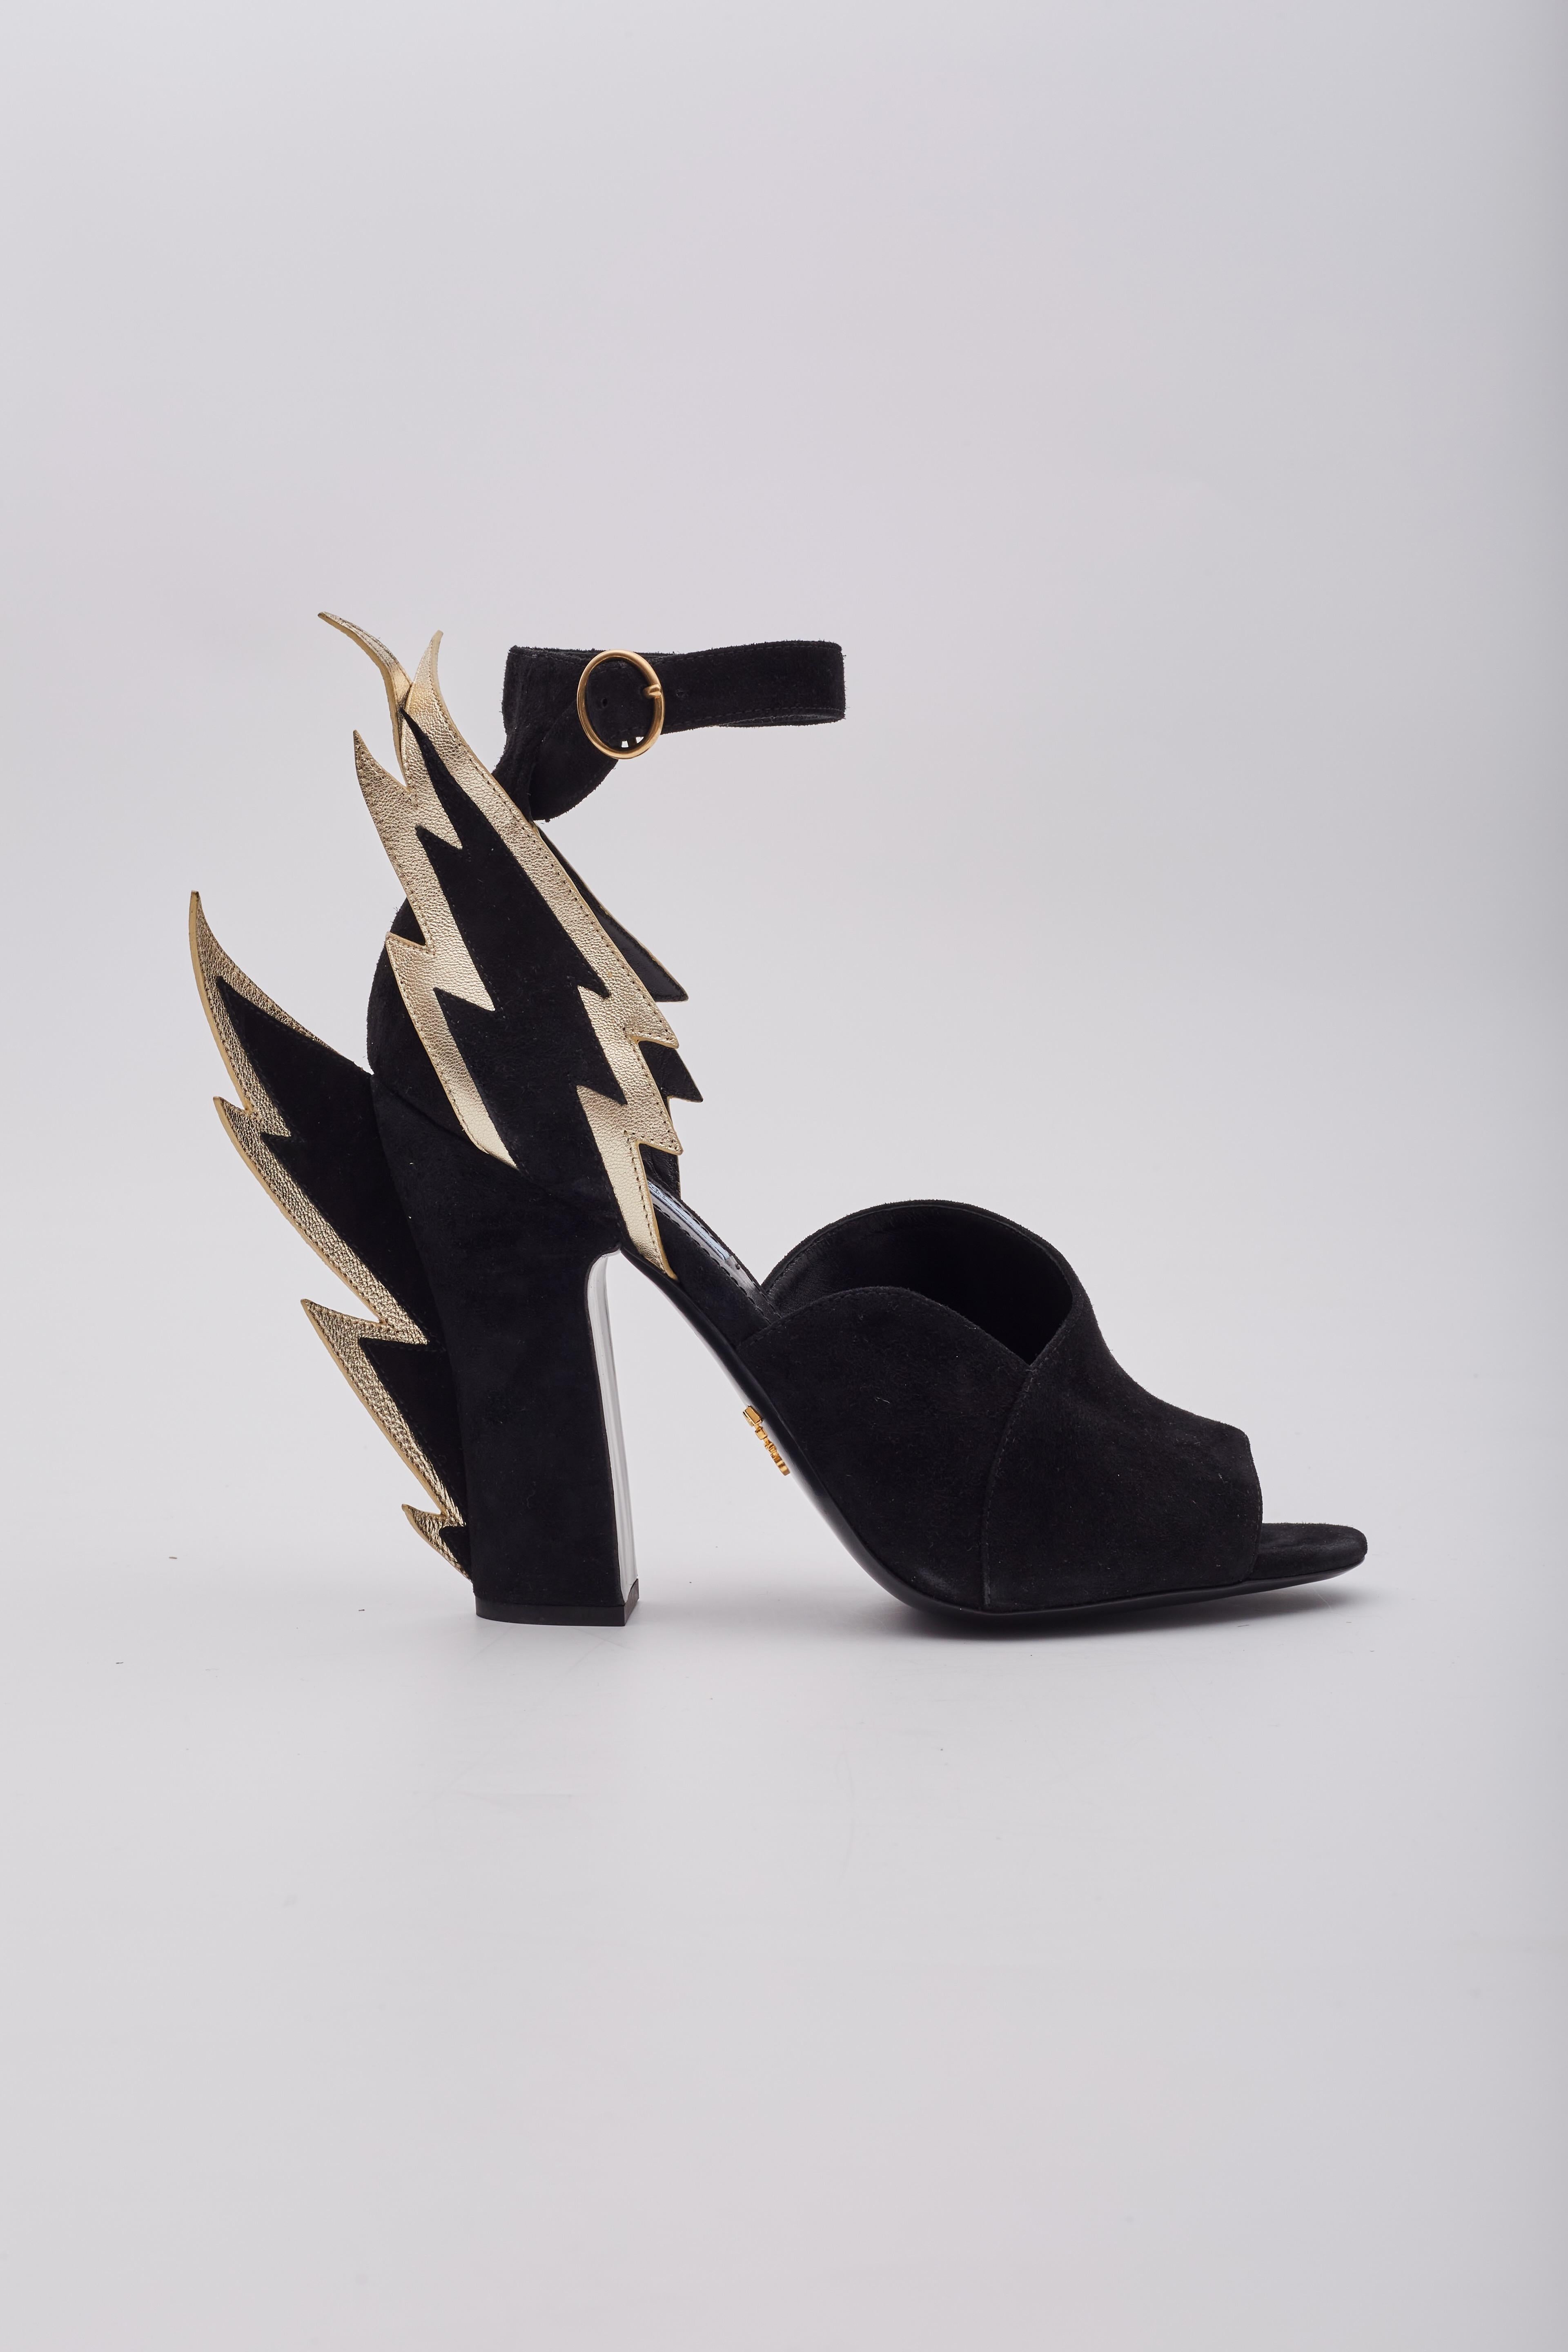 Prada Lightning Bolt Black Suede Gold Chunky Heels (EU 39) For Sale 2